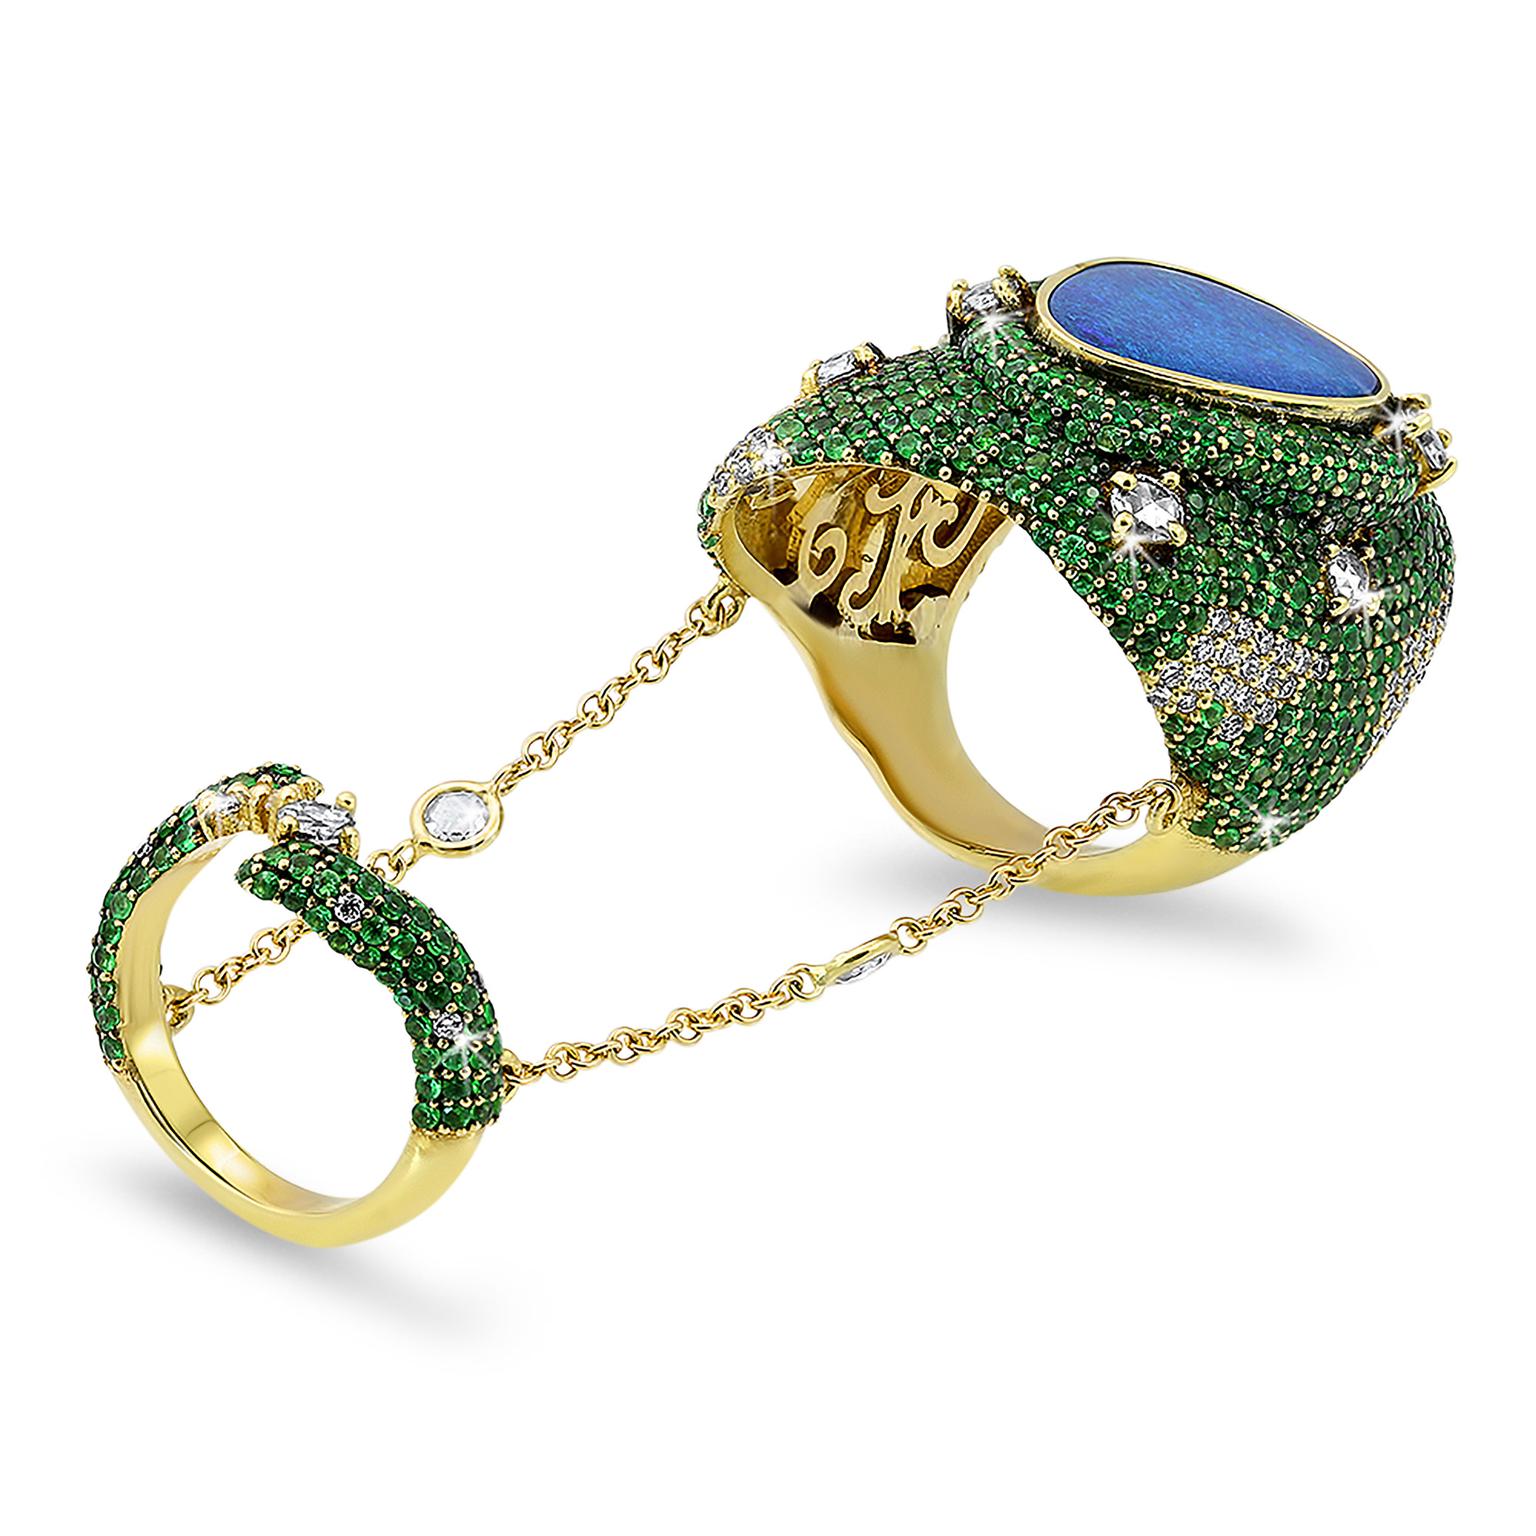 Michael John tsavorite and opal chain ring